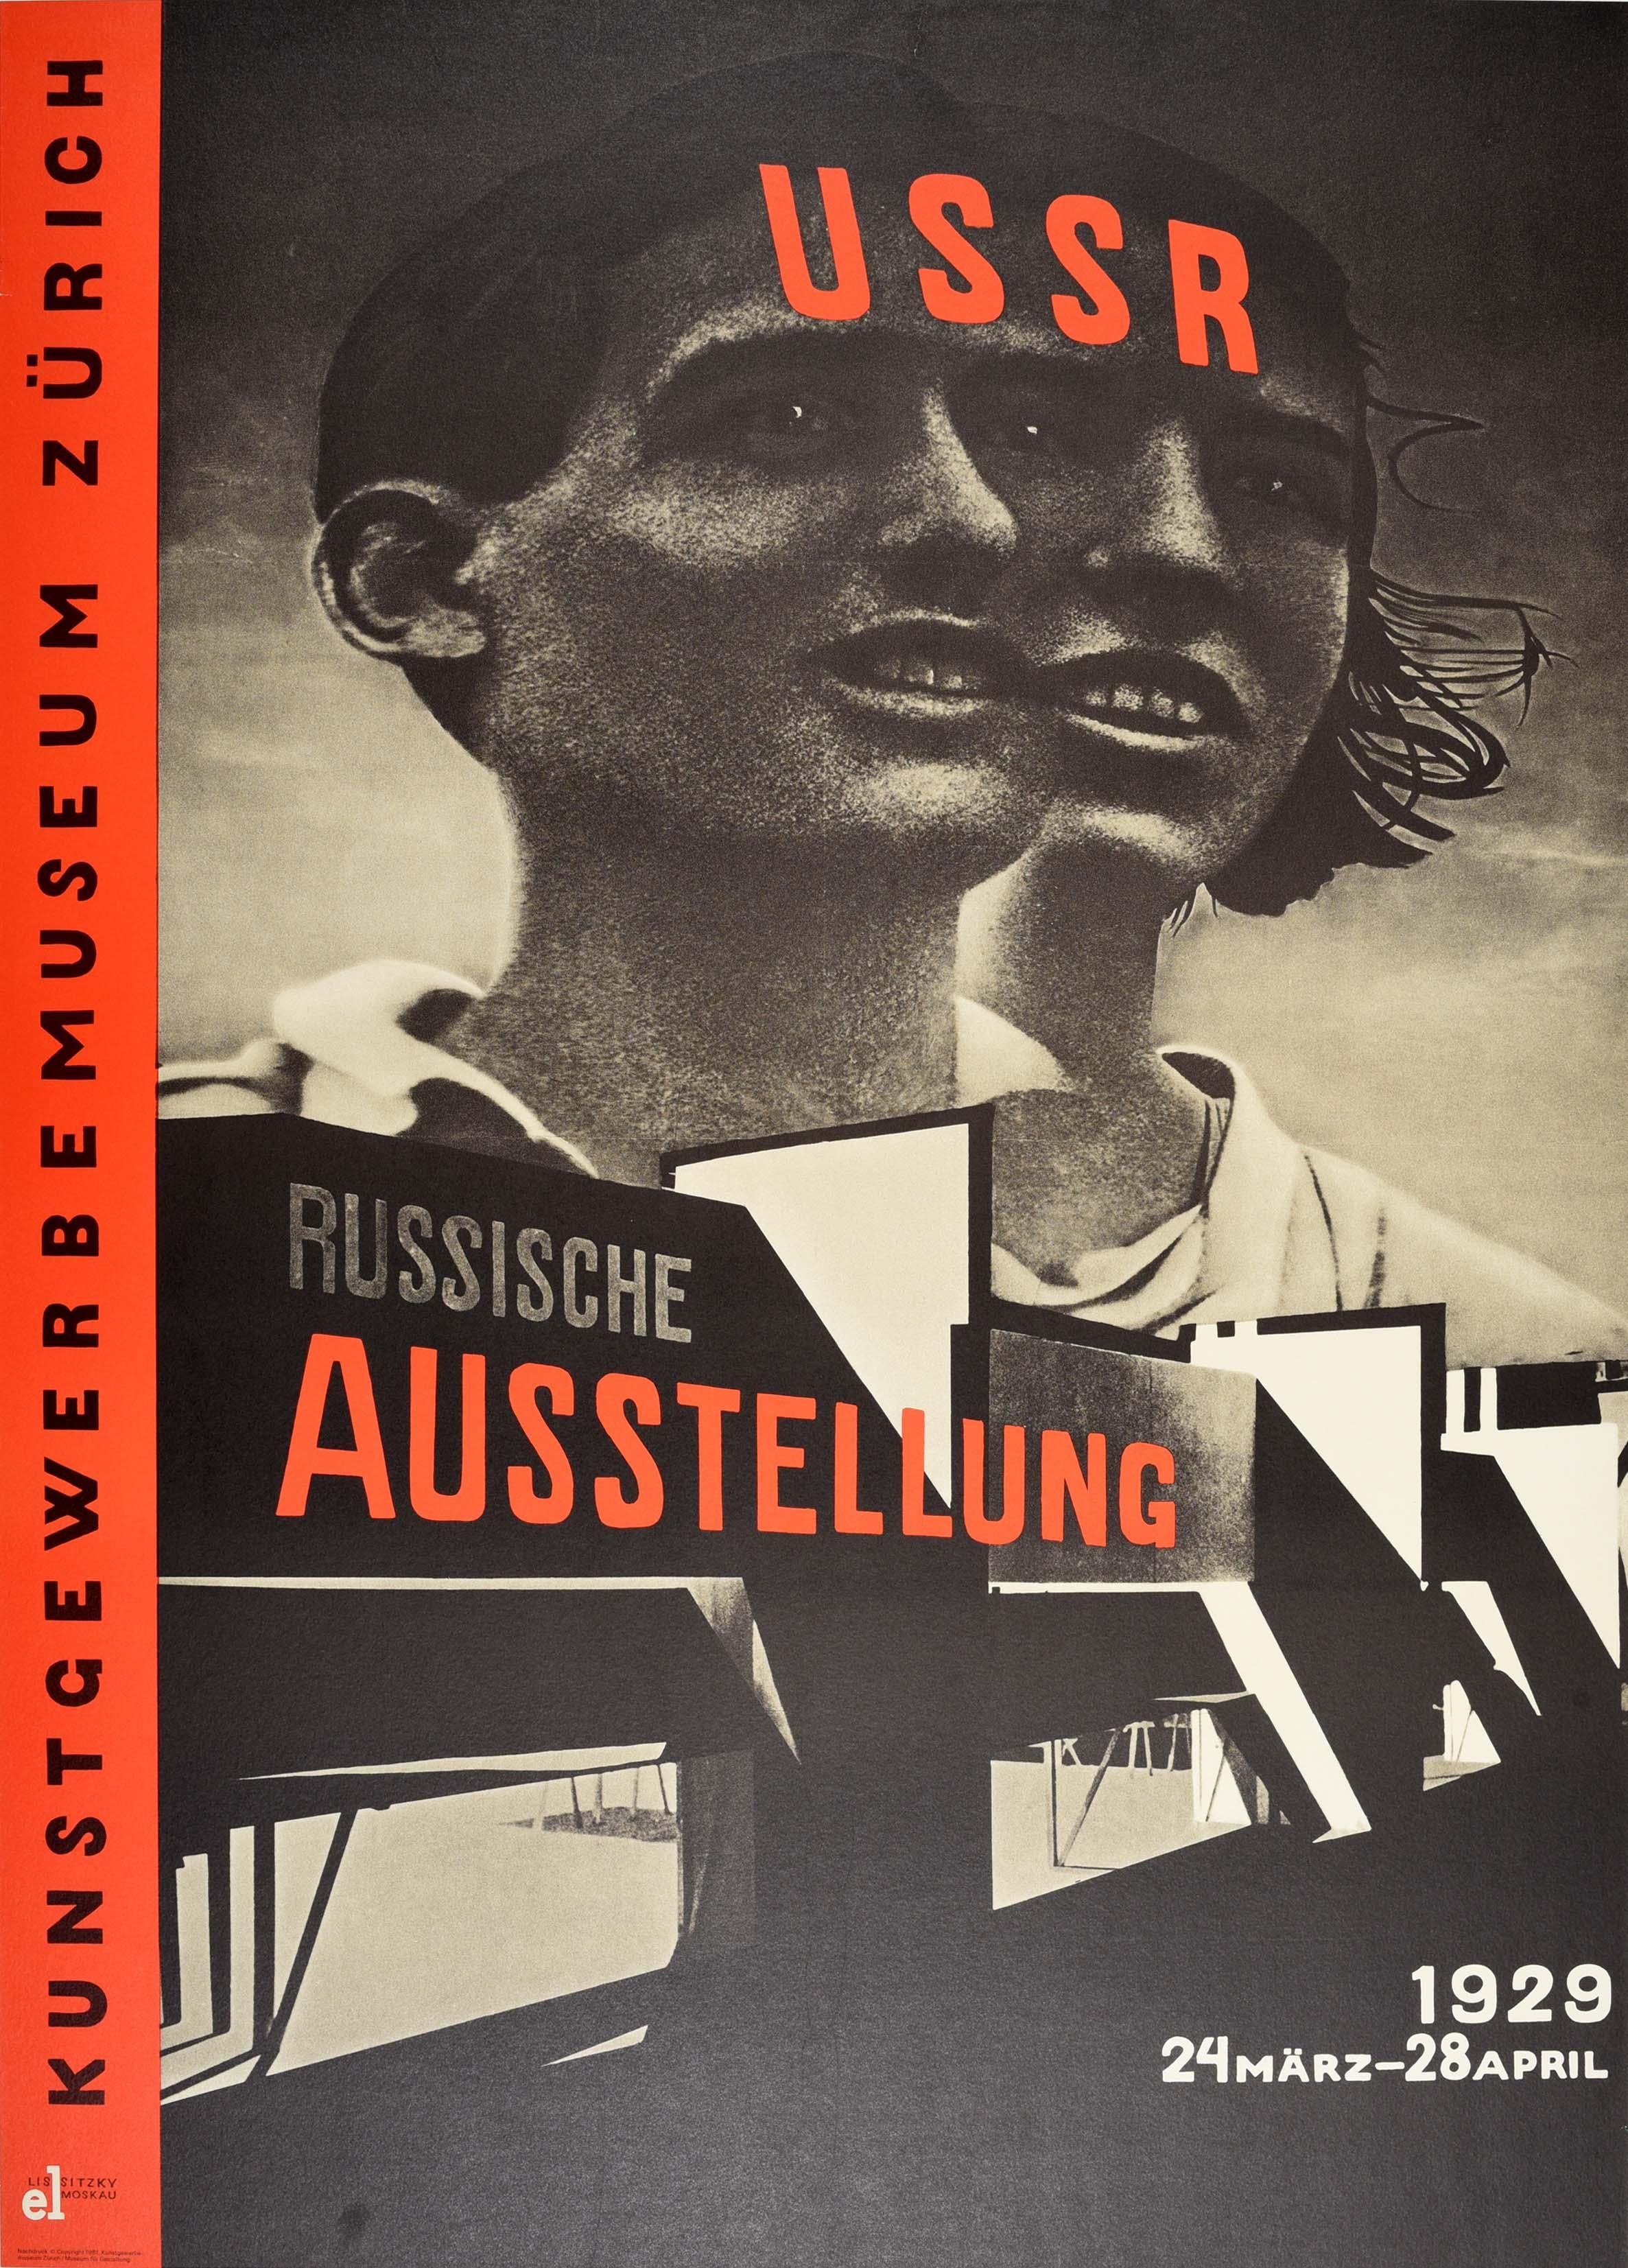 1980 Poster For Russian Exhibition USSR 1929 Constructivist Design Museum Zurich